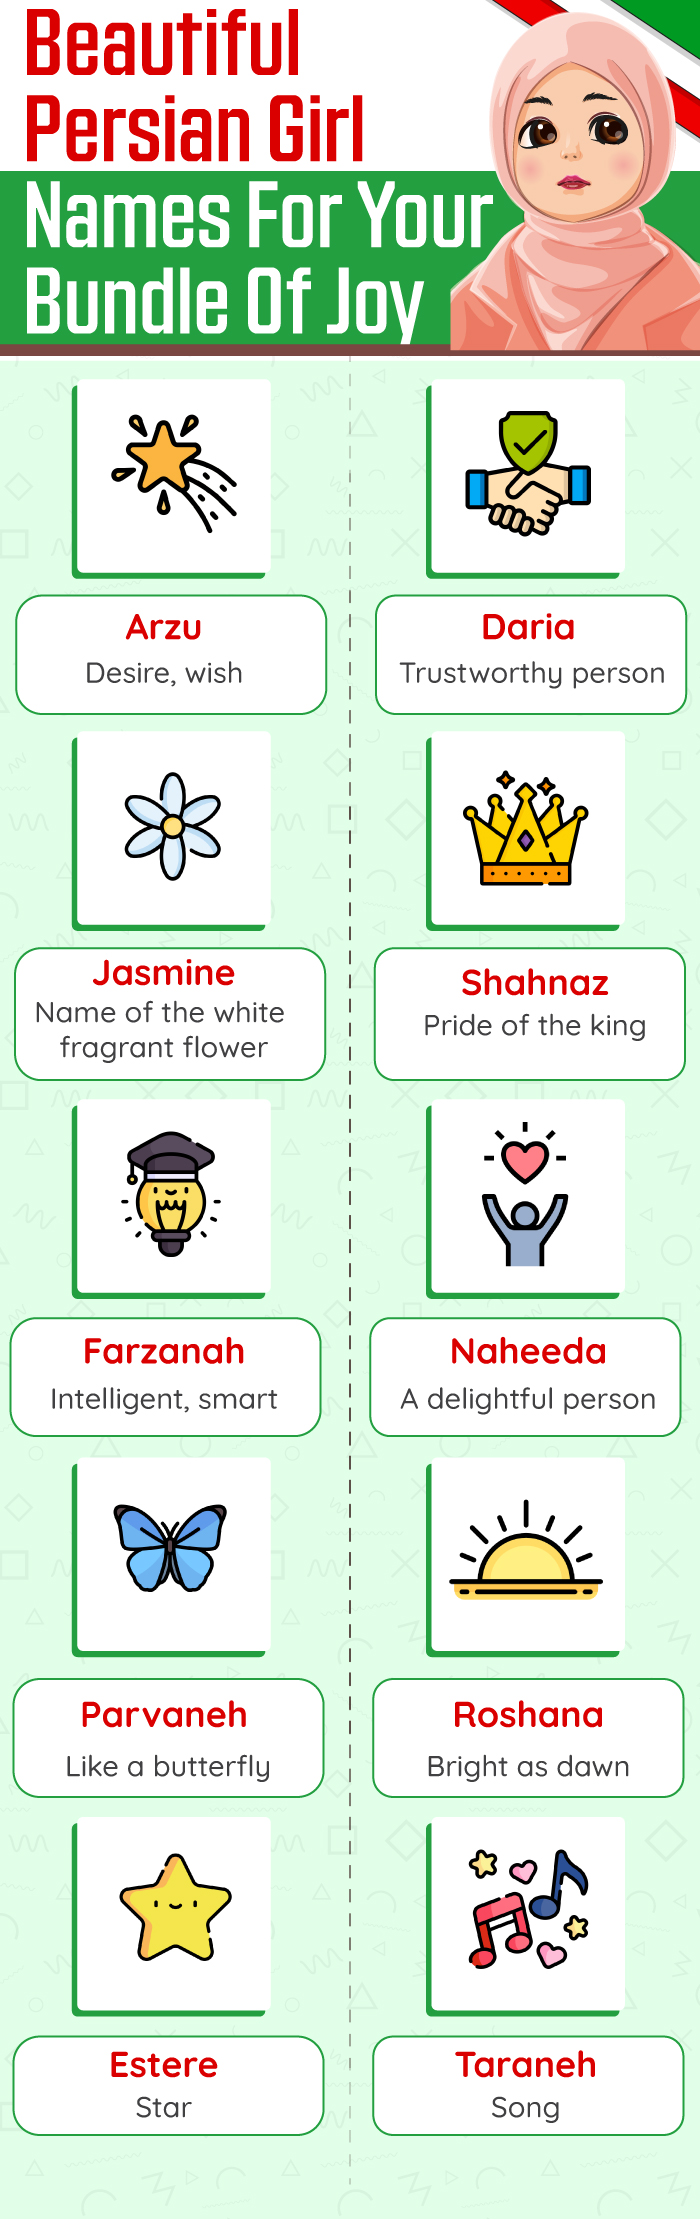 beautiful persian girl names for your bundle of joy(infographic)